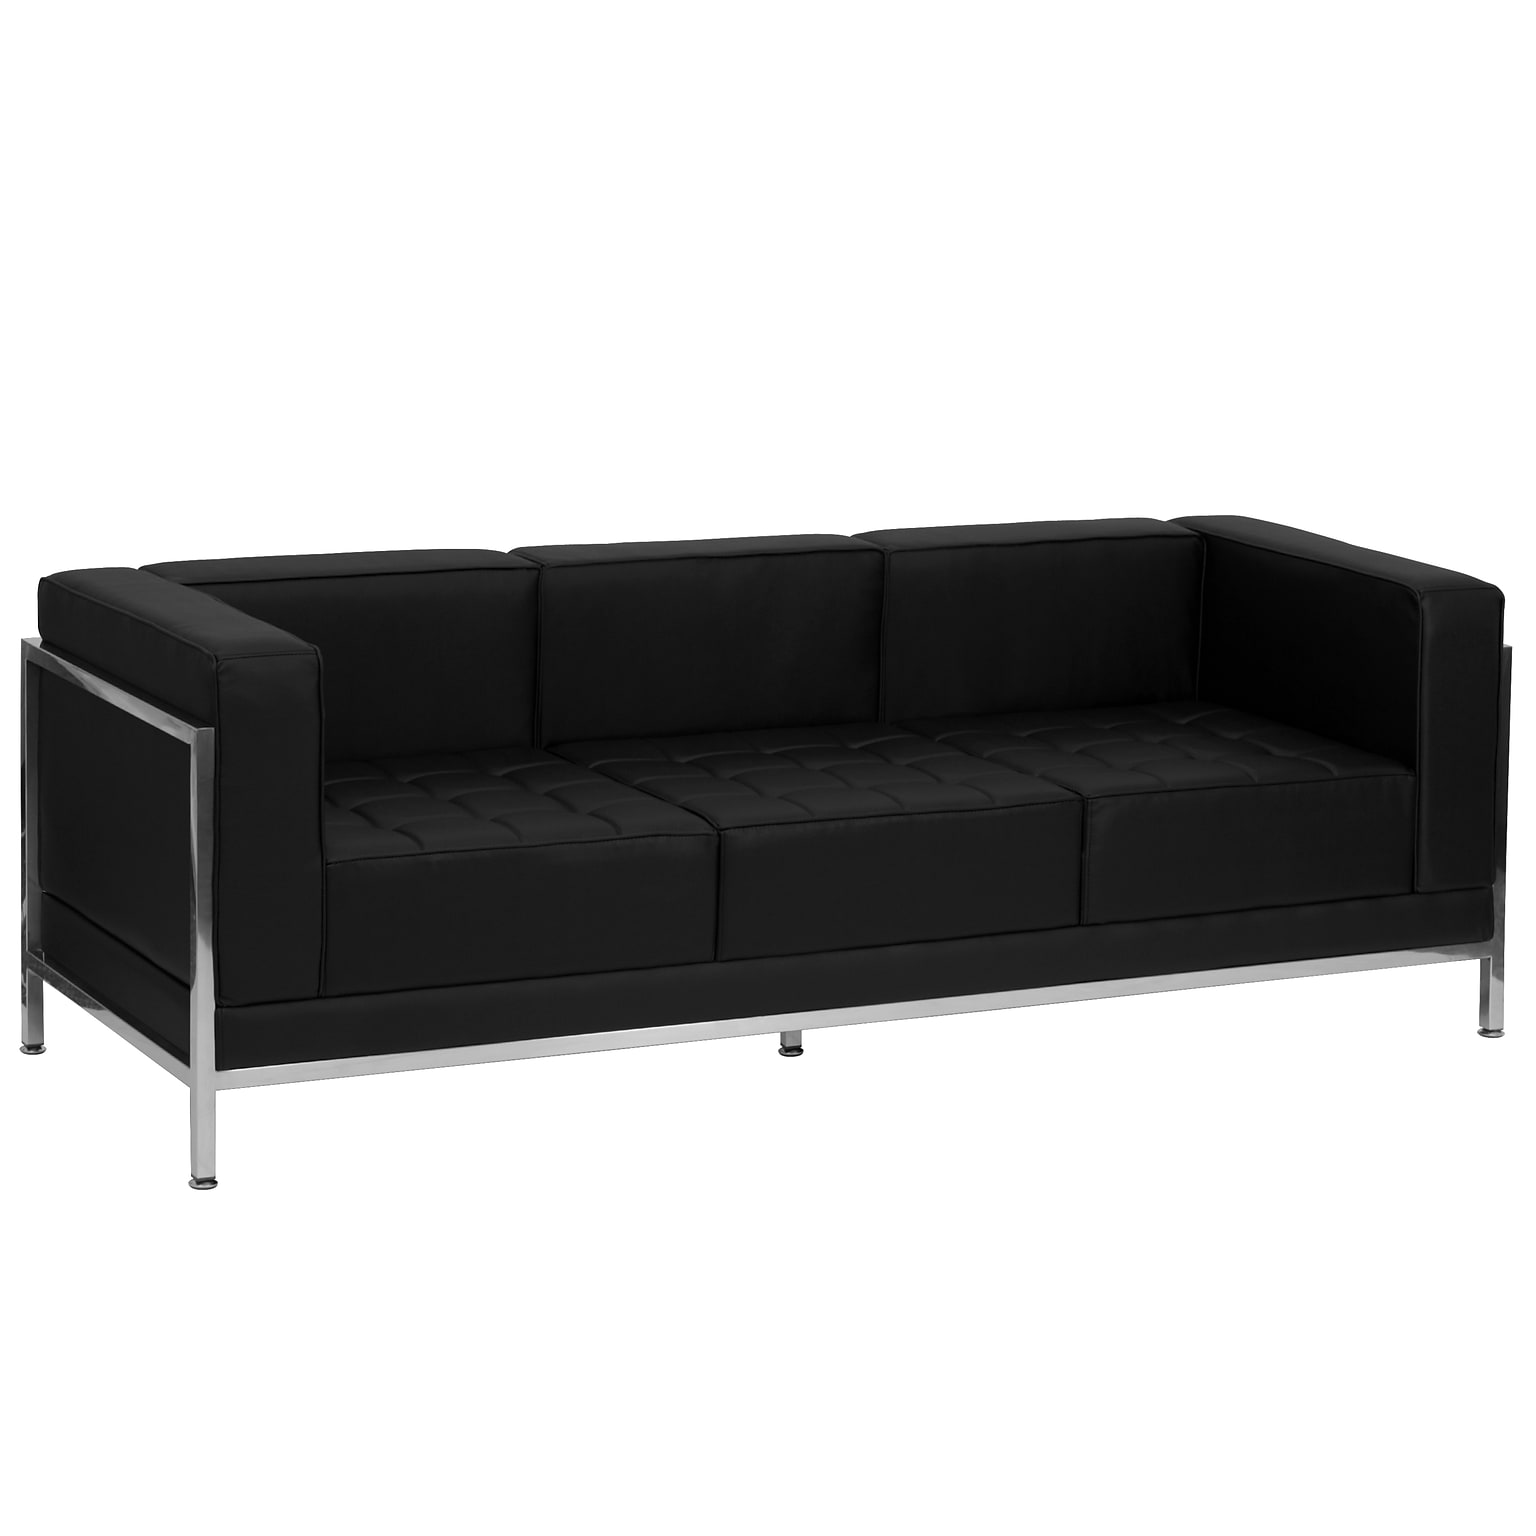 Flash Furniture HERCULES Imagination Series 79 LeatherSoft Sofa with Encasing Frame, Black (ZBIMAGSOFA)